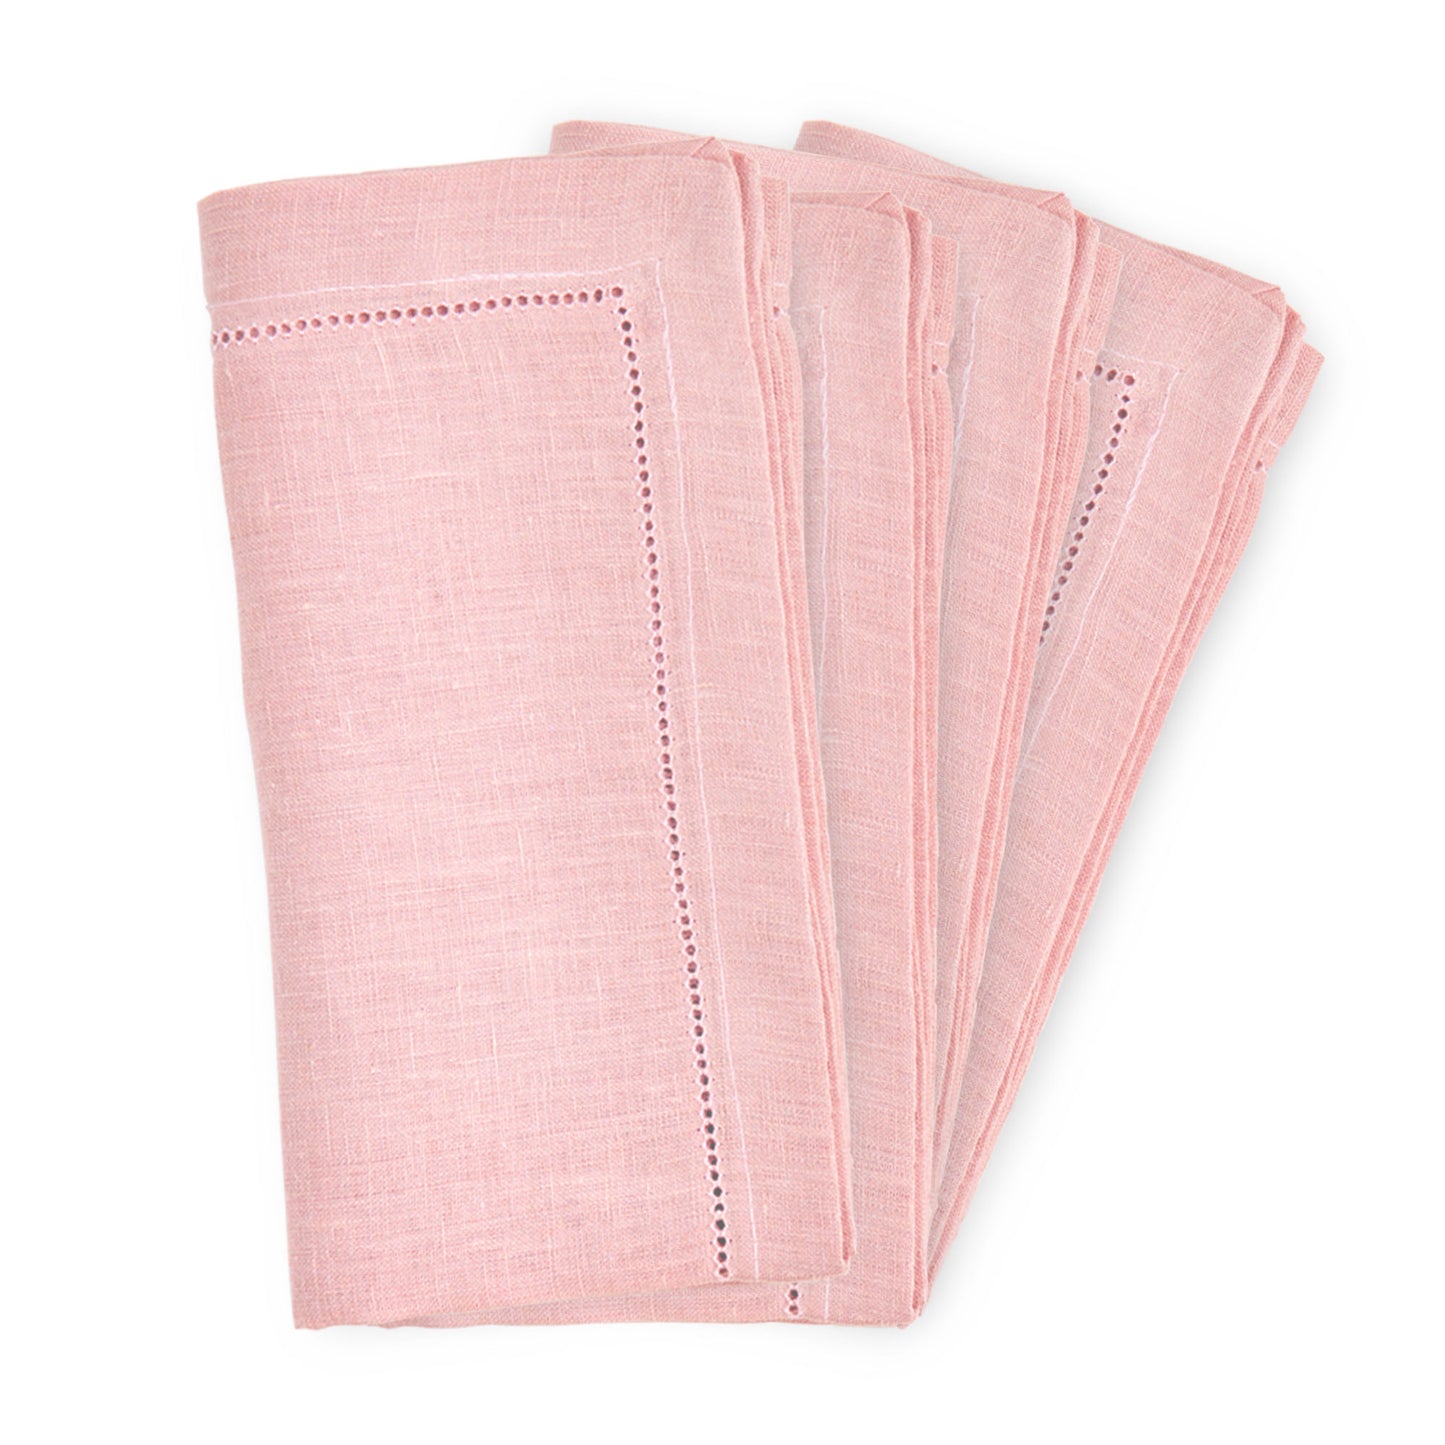 Set of 4 - Linen Hemstitched Napkins - Dusty Pink